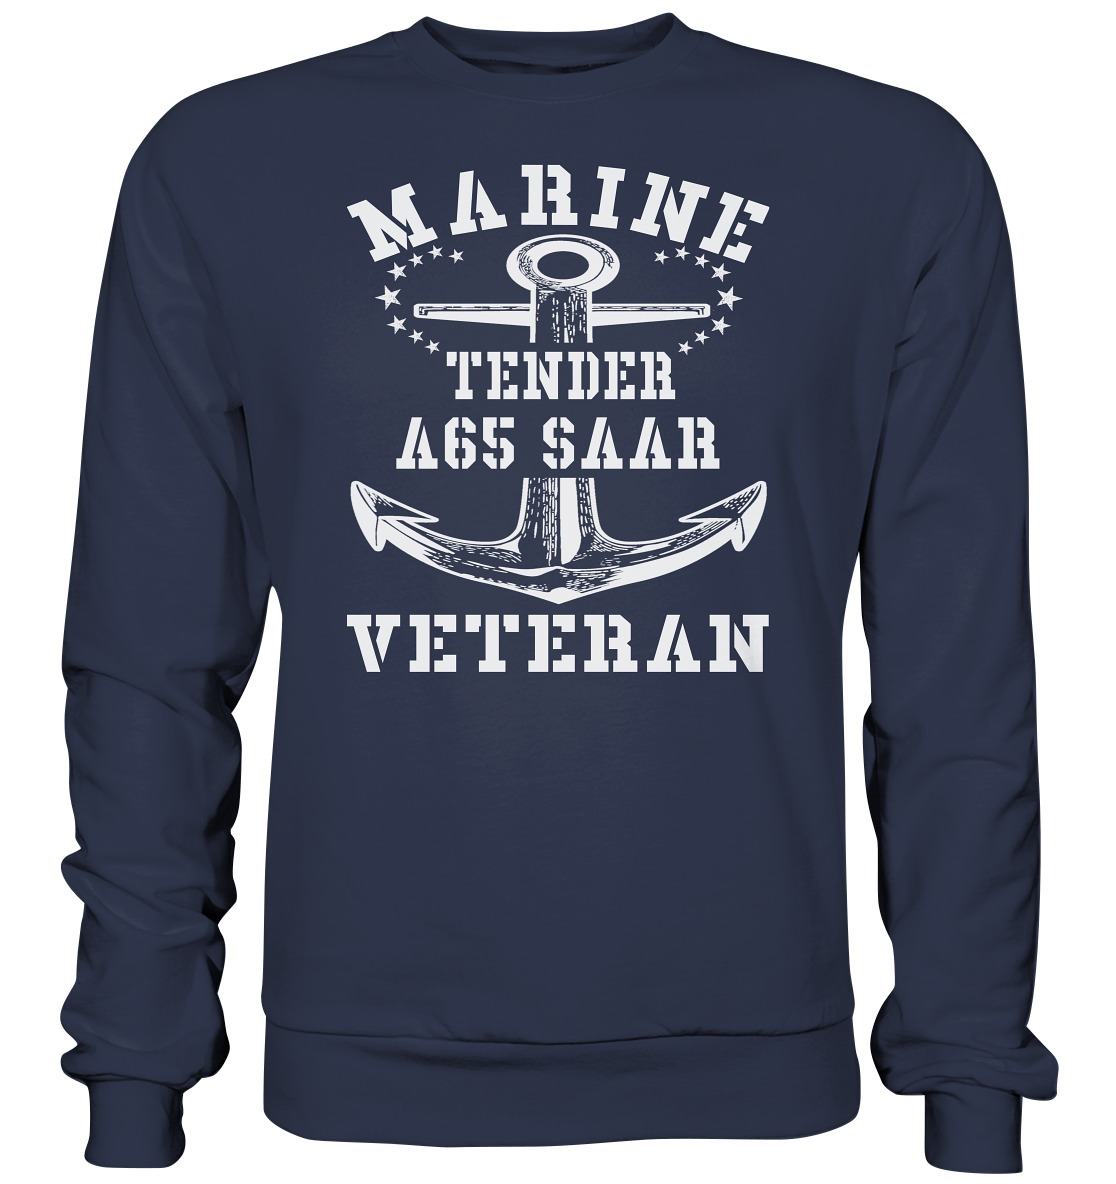 Tender A66 NECKAR Marine Veteran - Premium Sweatshirt